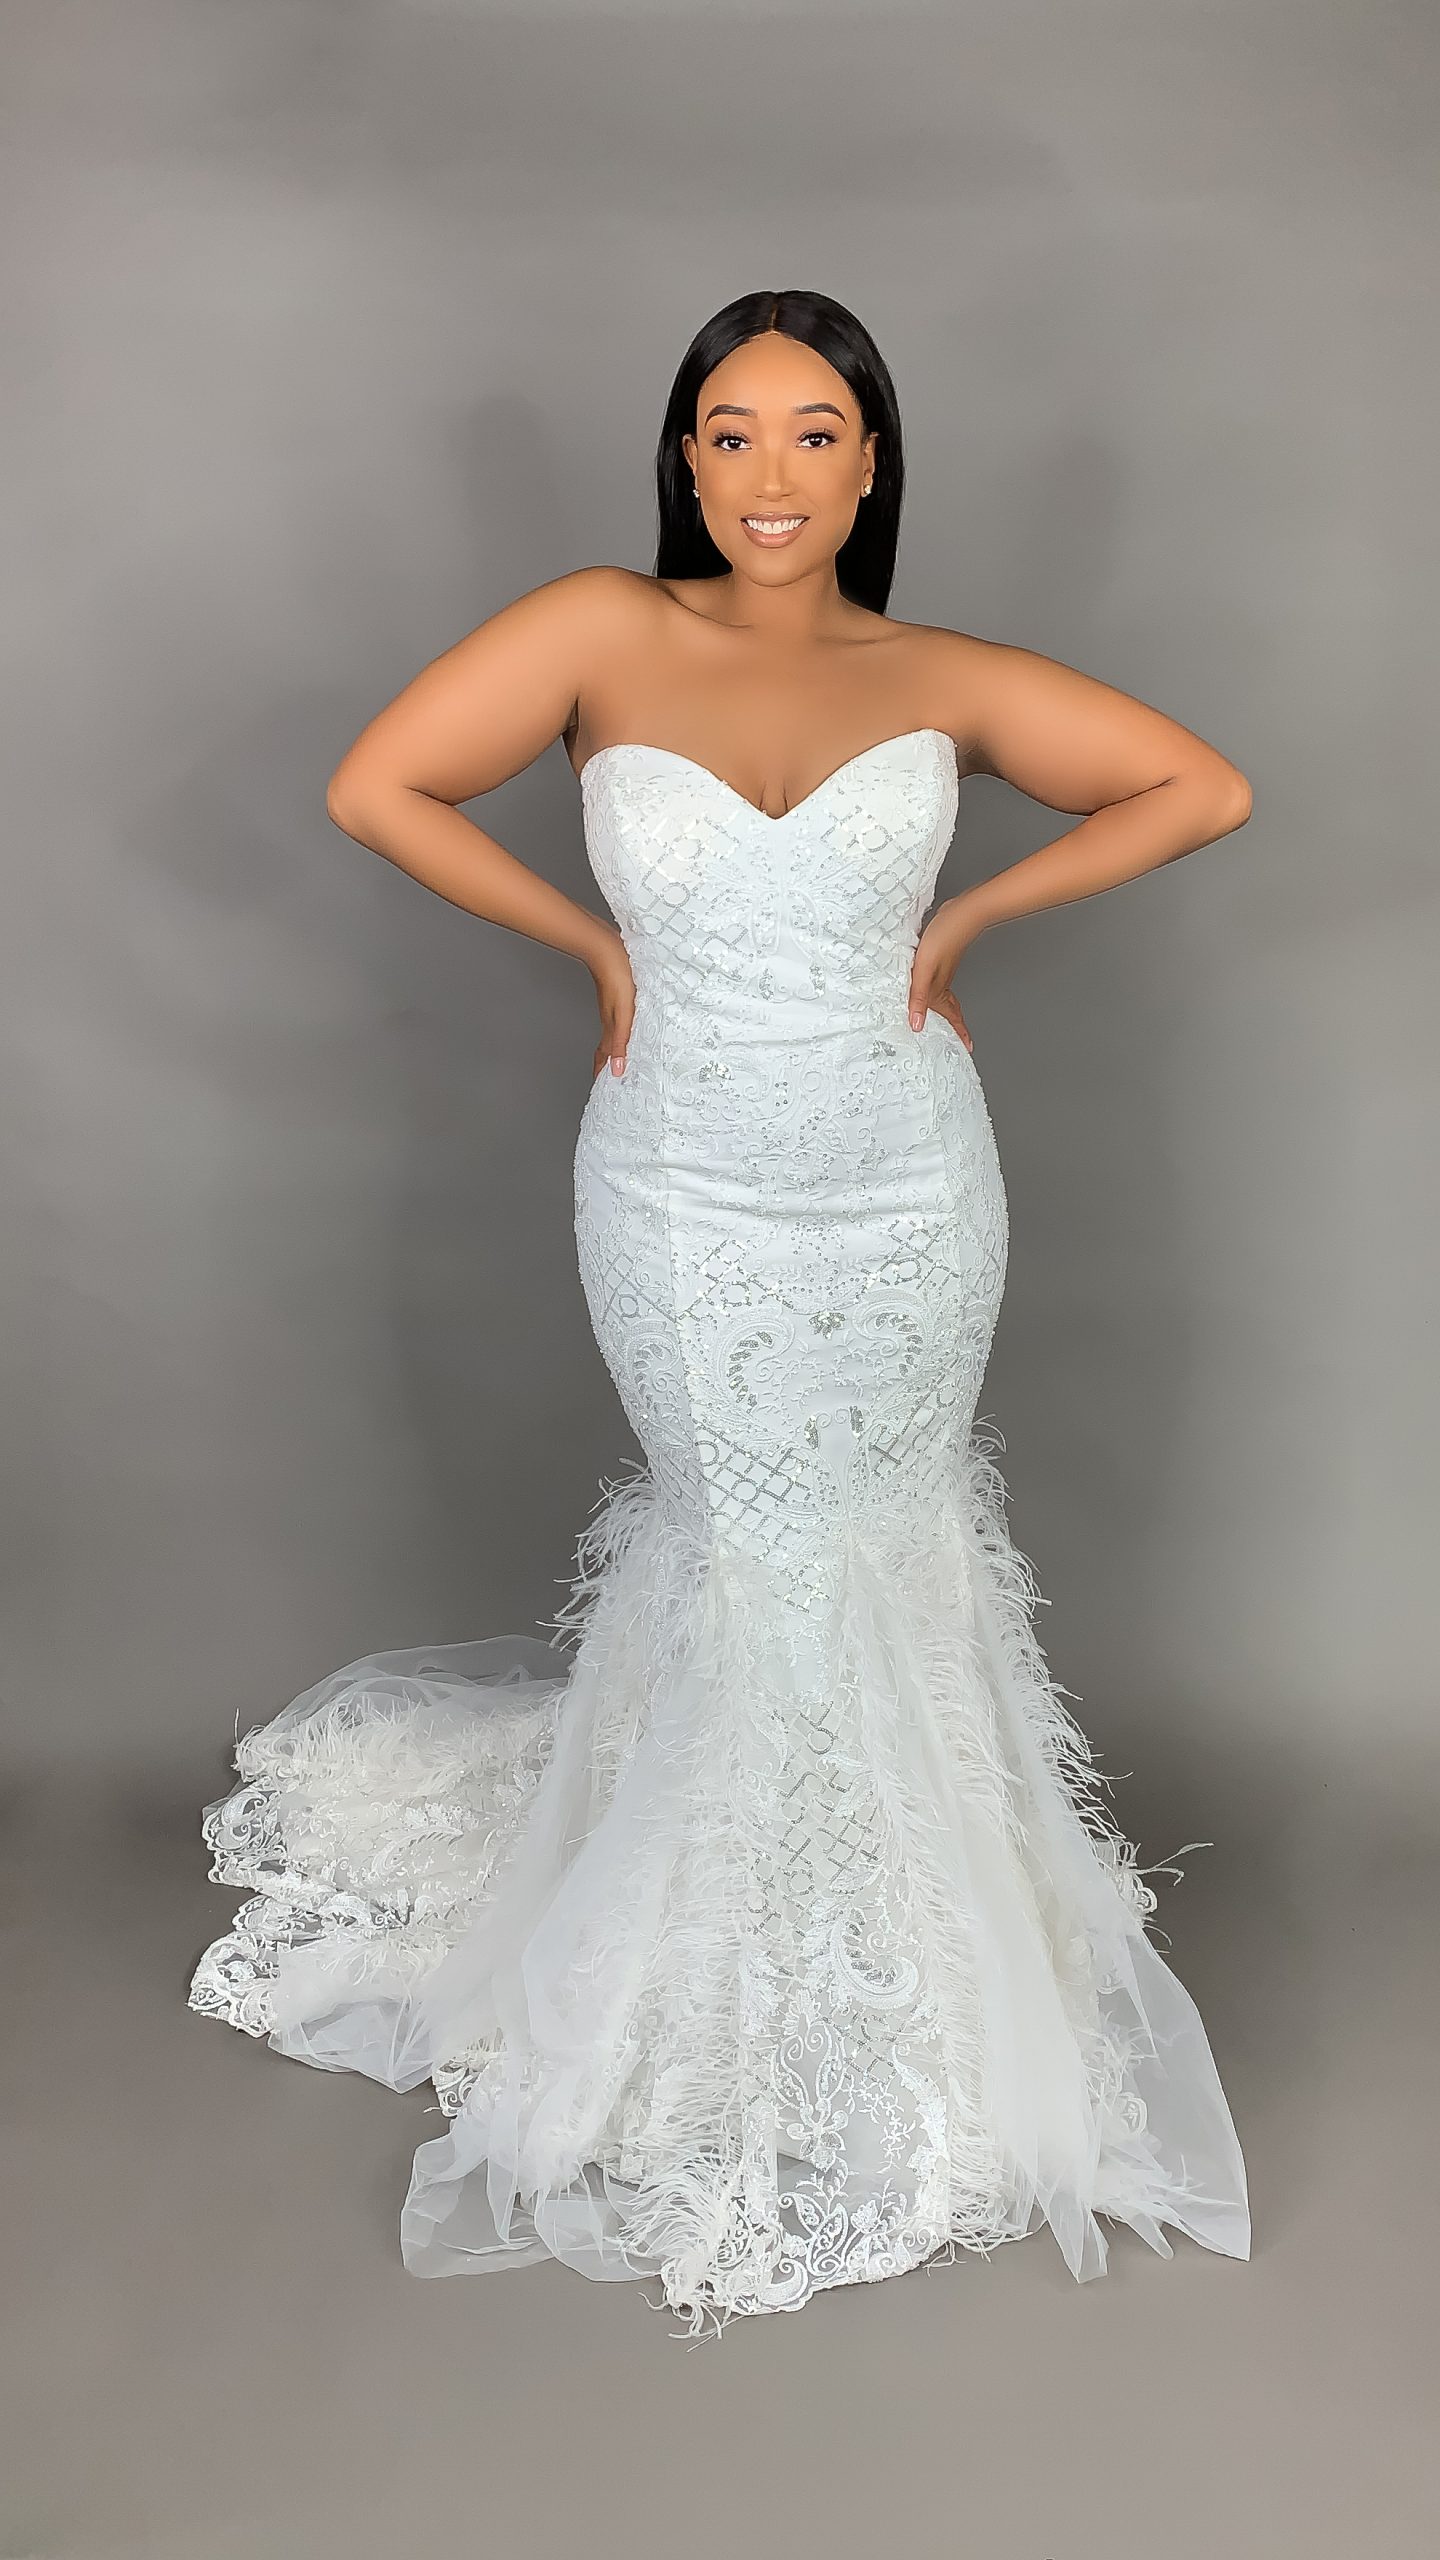 Lace Wedding Dress For Plus Size - nelsonismissing